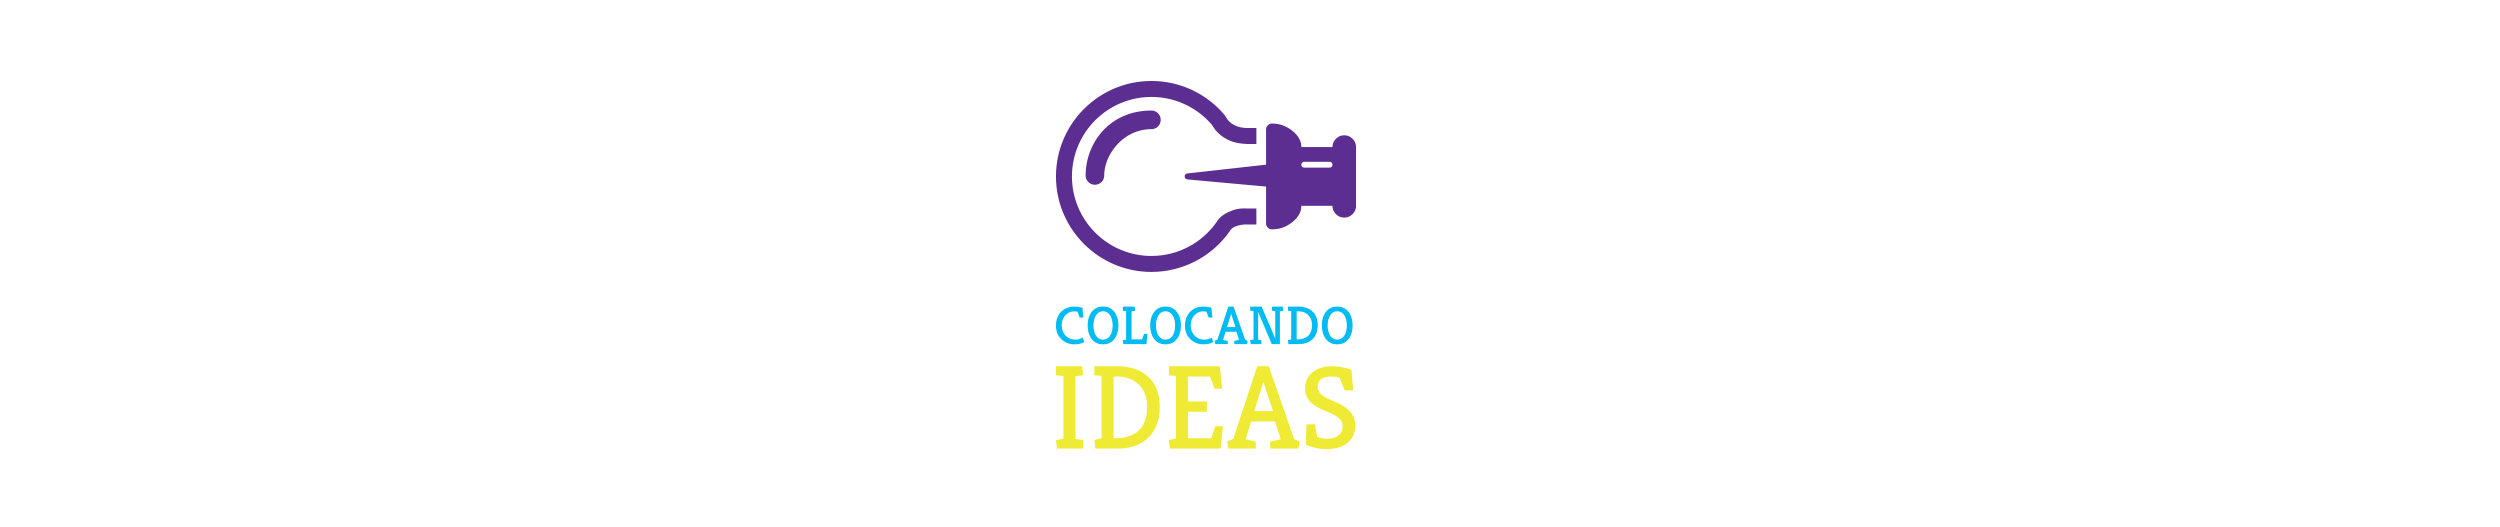 Propuesta de logo para empresa de marketing y comunicación Colocando ideas, México